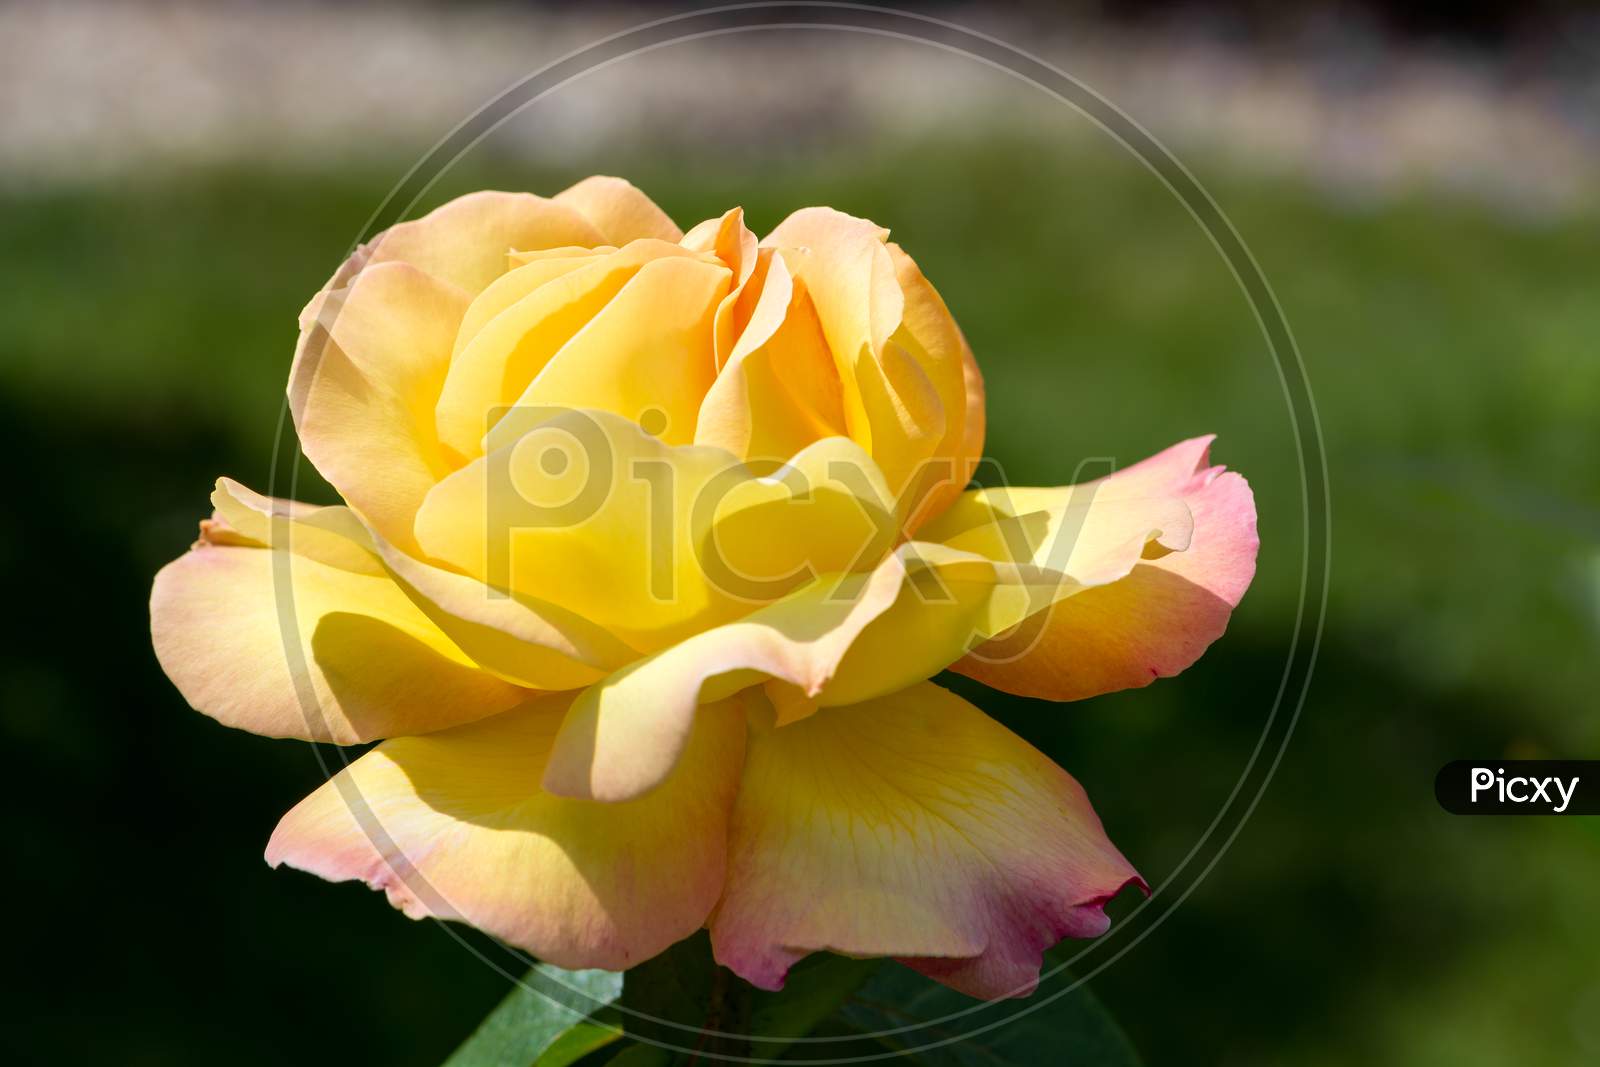 Yellow Rose (Peace) Flowering In An English Garden